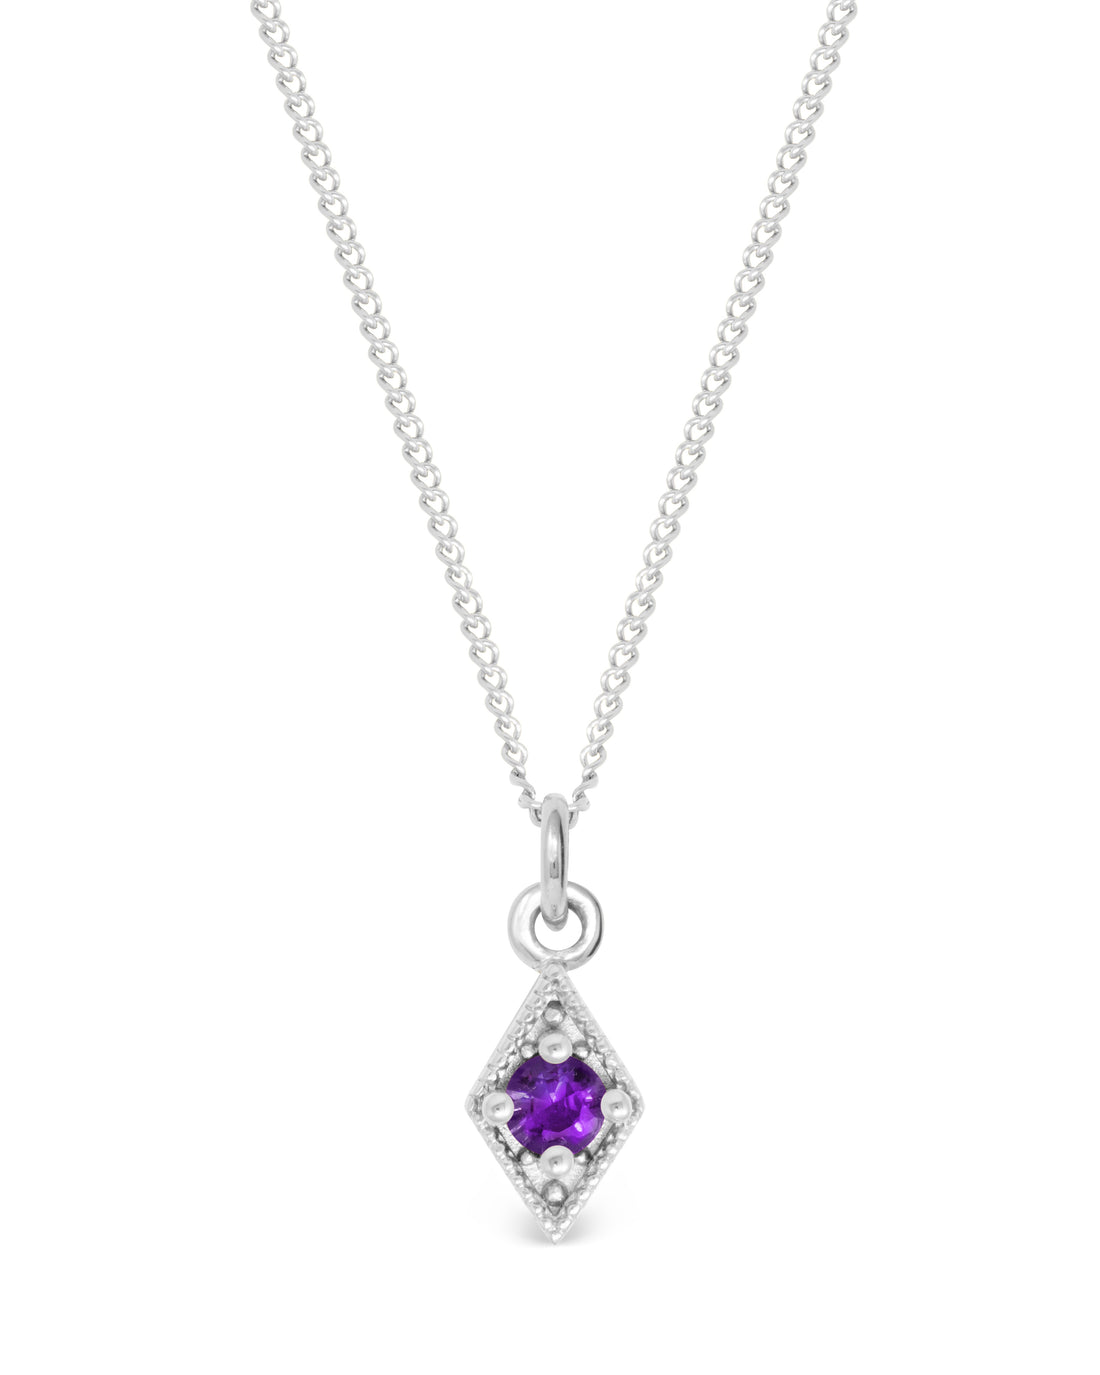 Iris Necklace - In stock